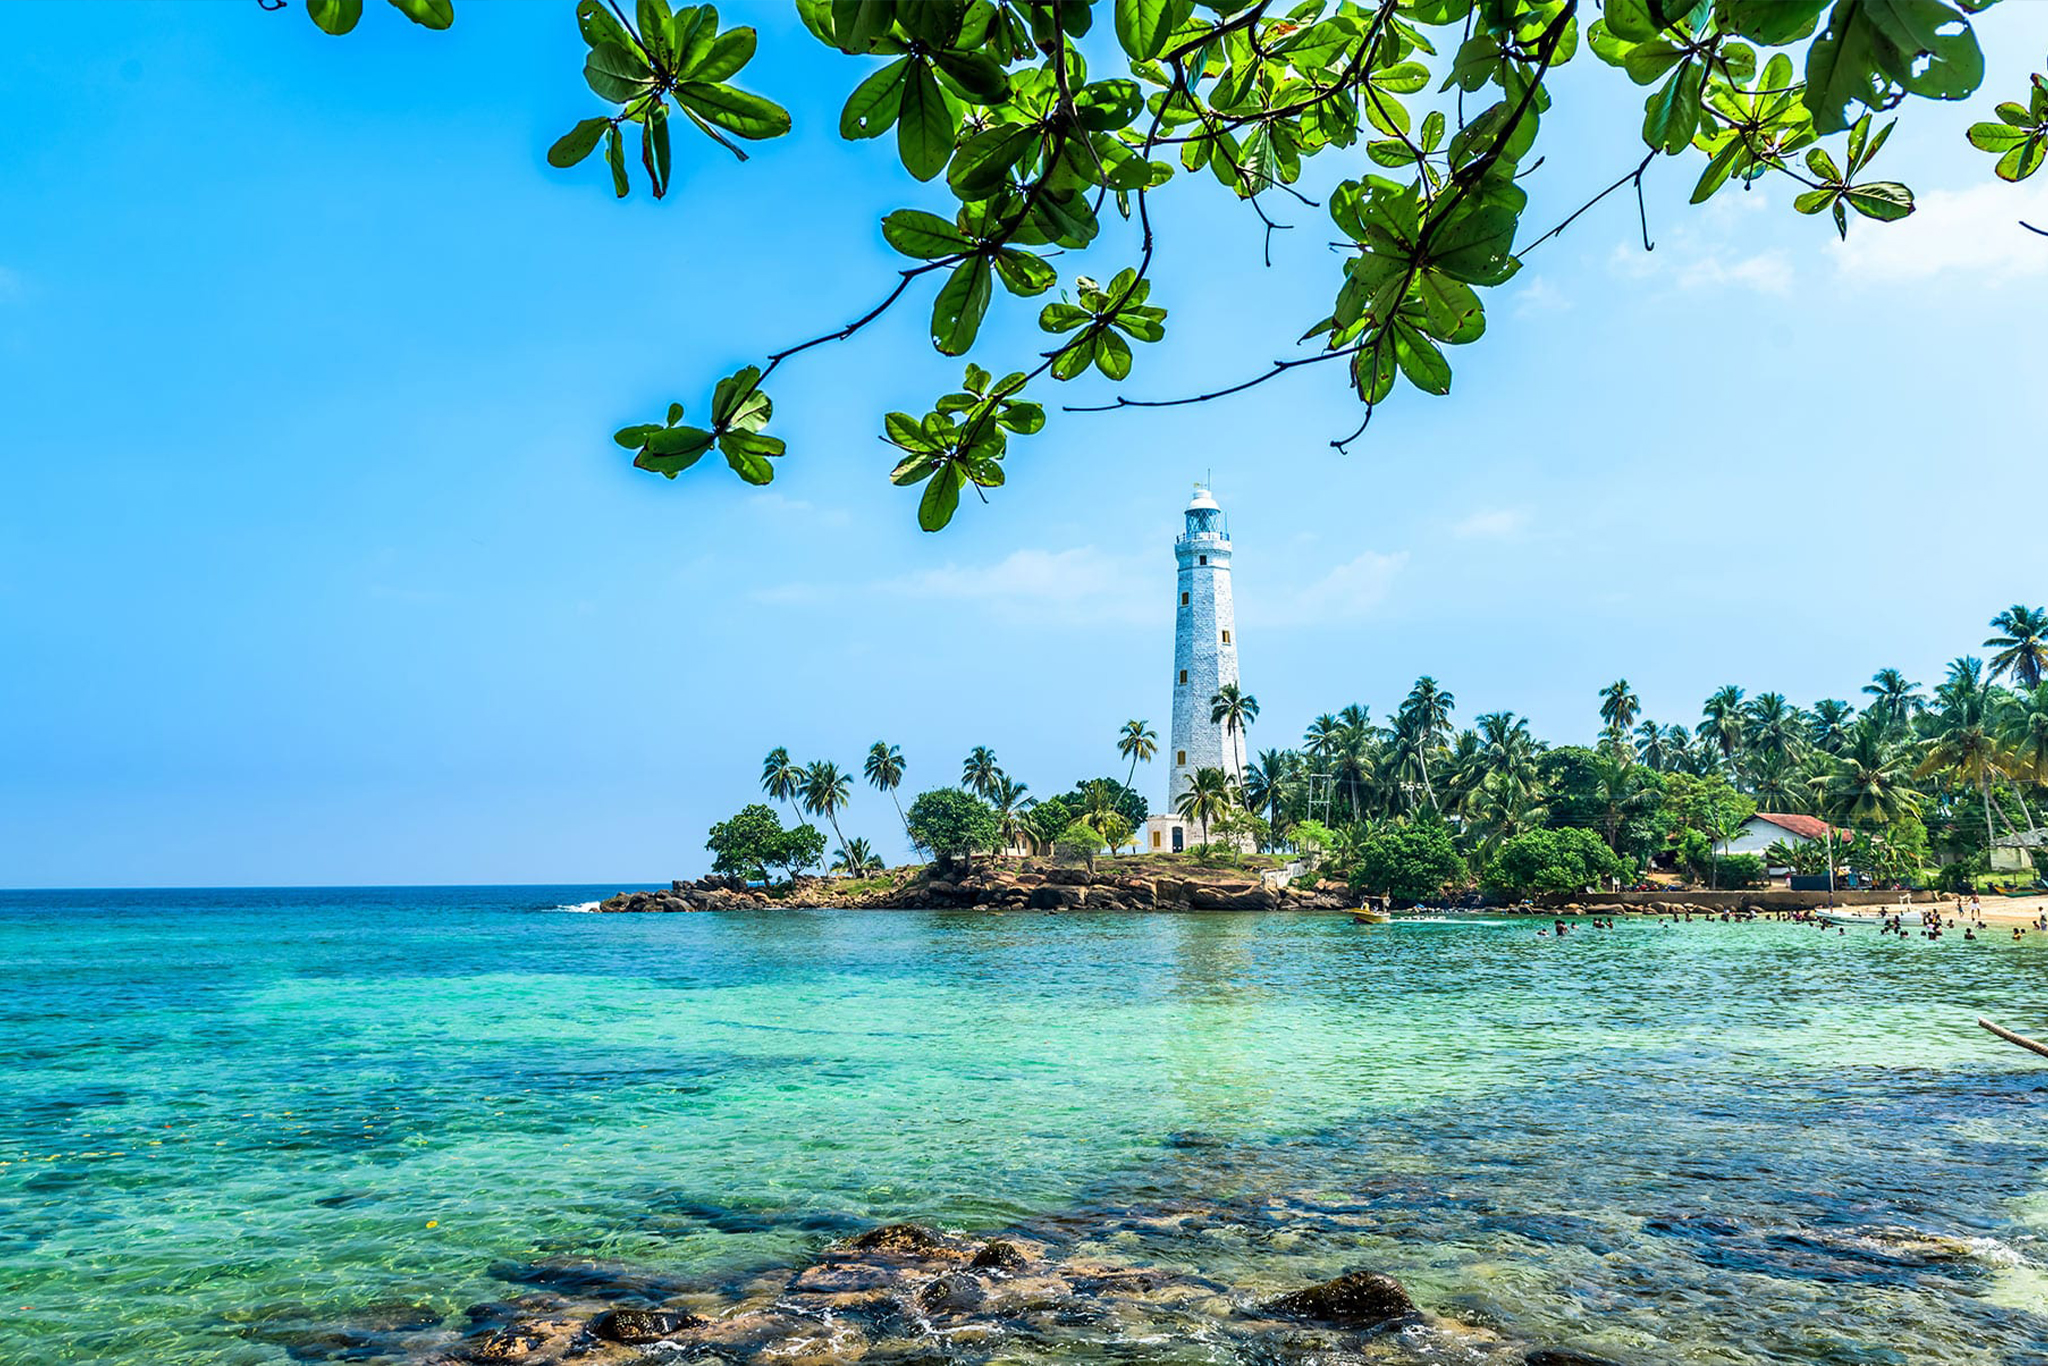 Юг шри ланки. Остров в индийском океане Цейлон. Остров Цейлон Шри Ланка. Негомбо Шри Ланка. Синнамон Шри Ланка.